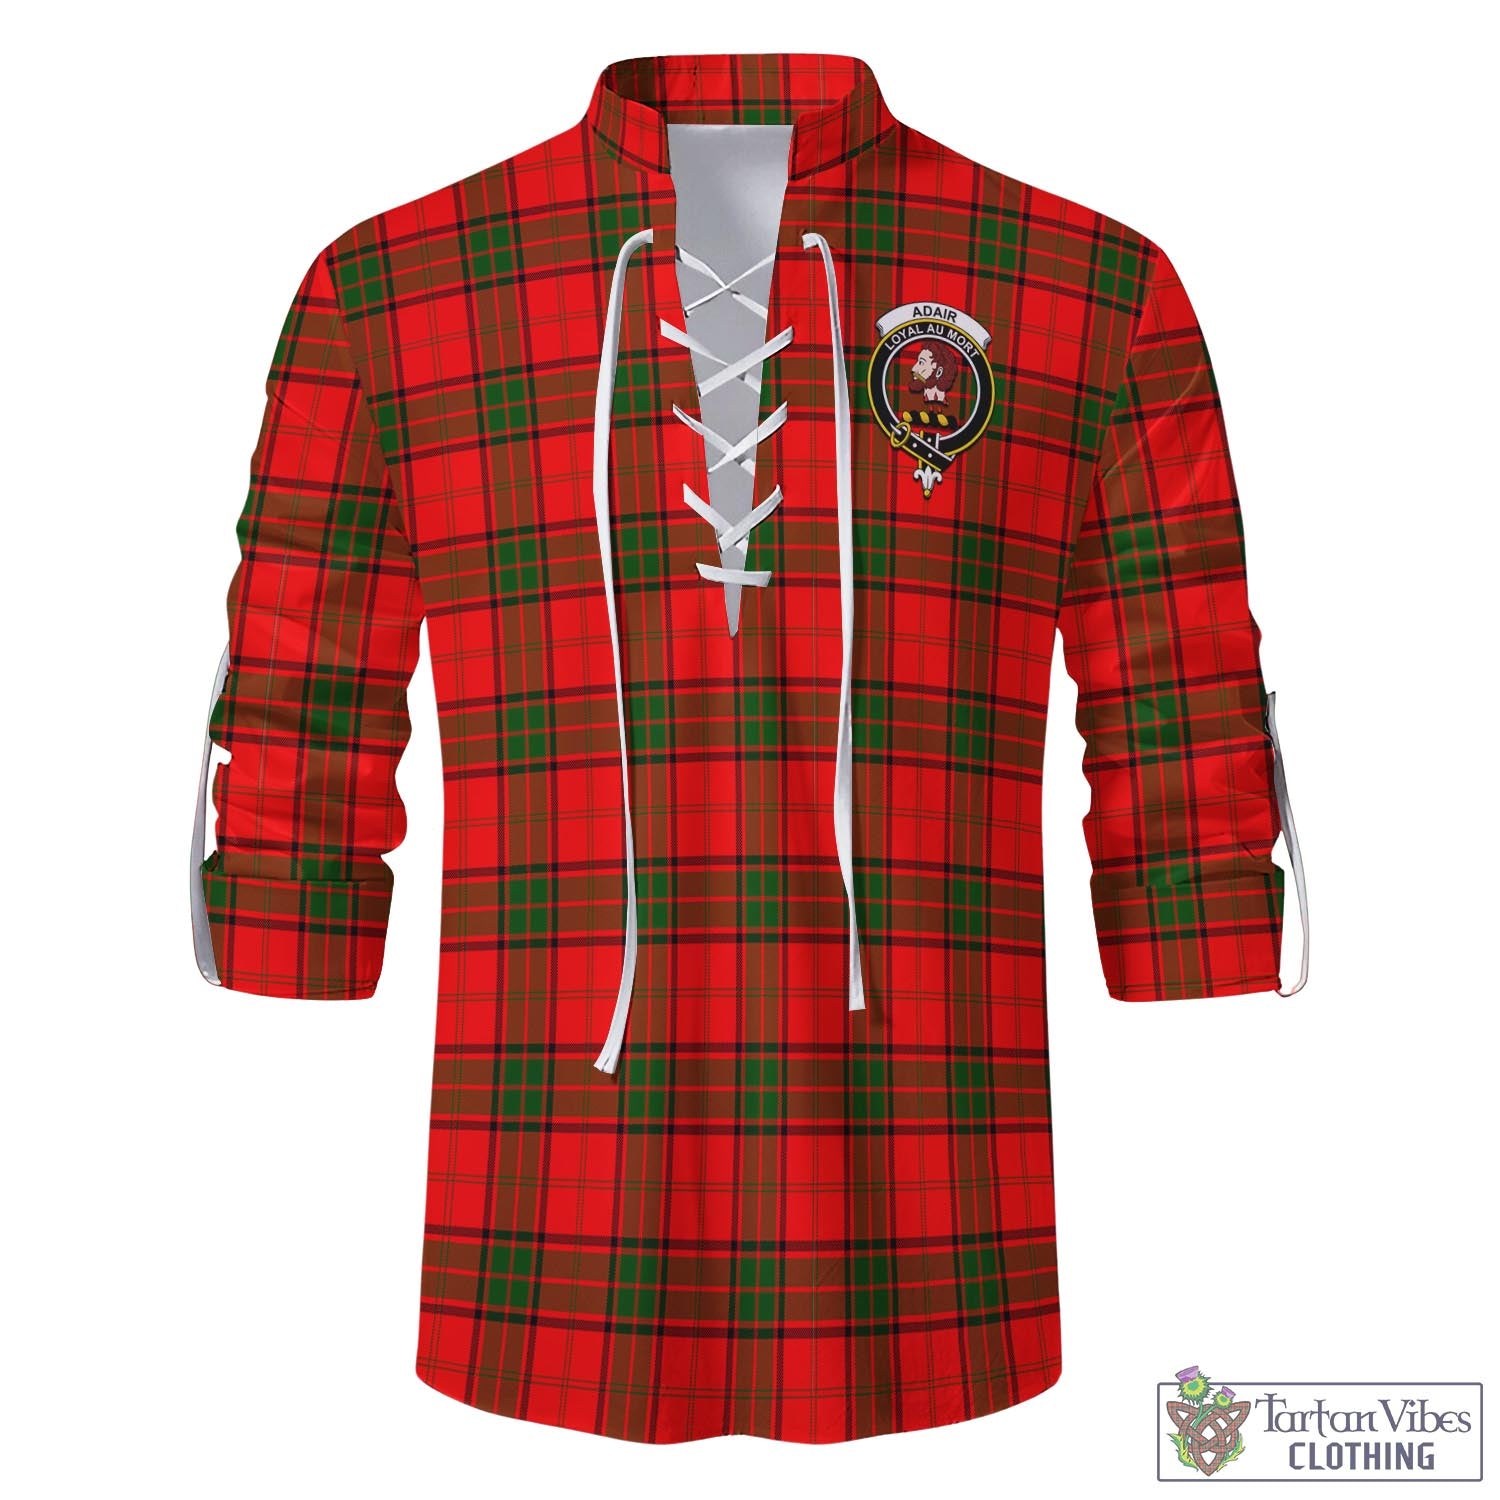 Tartan Vibes Clothing Adair Tartan Men's Scottish Traditional Jacobite Ghillie Kilt Shirt with Family Crest